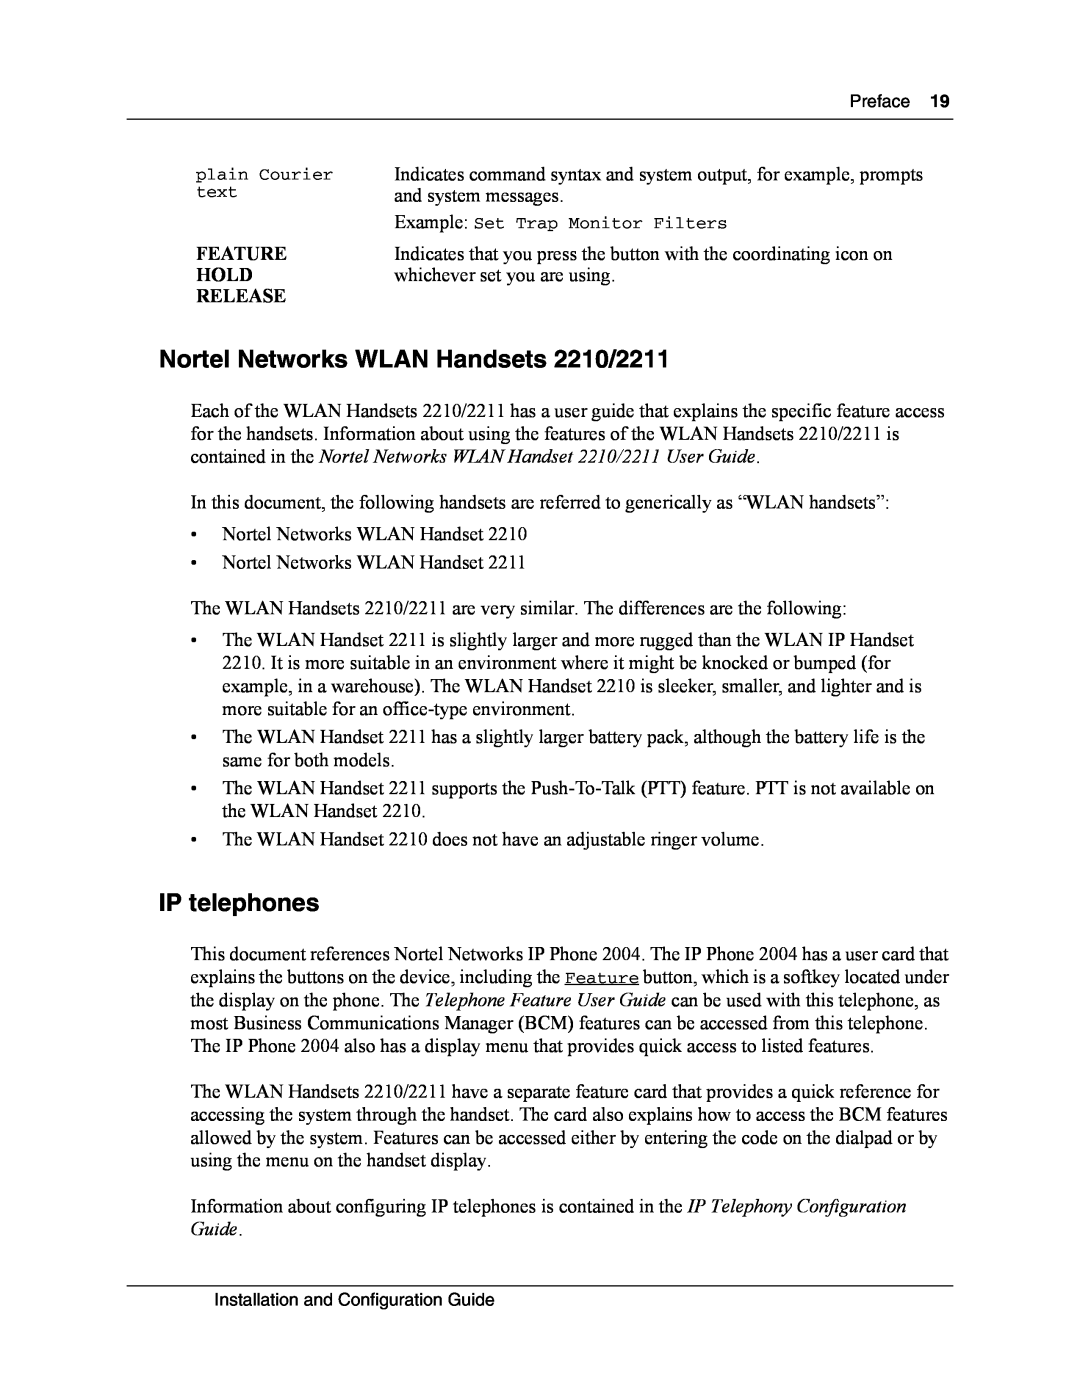 Nortel Networks MOG6xx, MOG7xx manual Nortel Networks WLAN Handsets 2210/2211, IP telephones, Feature, Hold, Release 